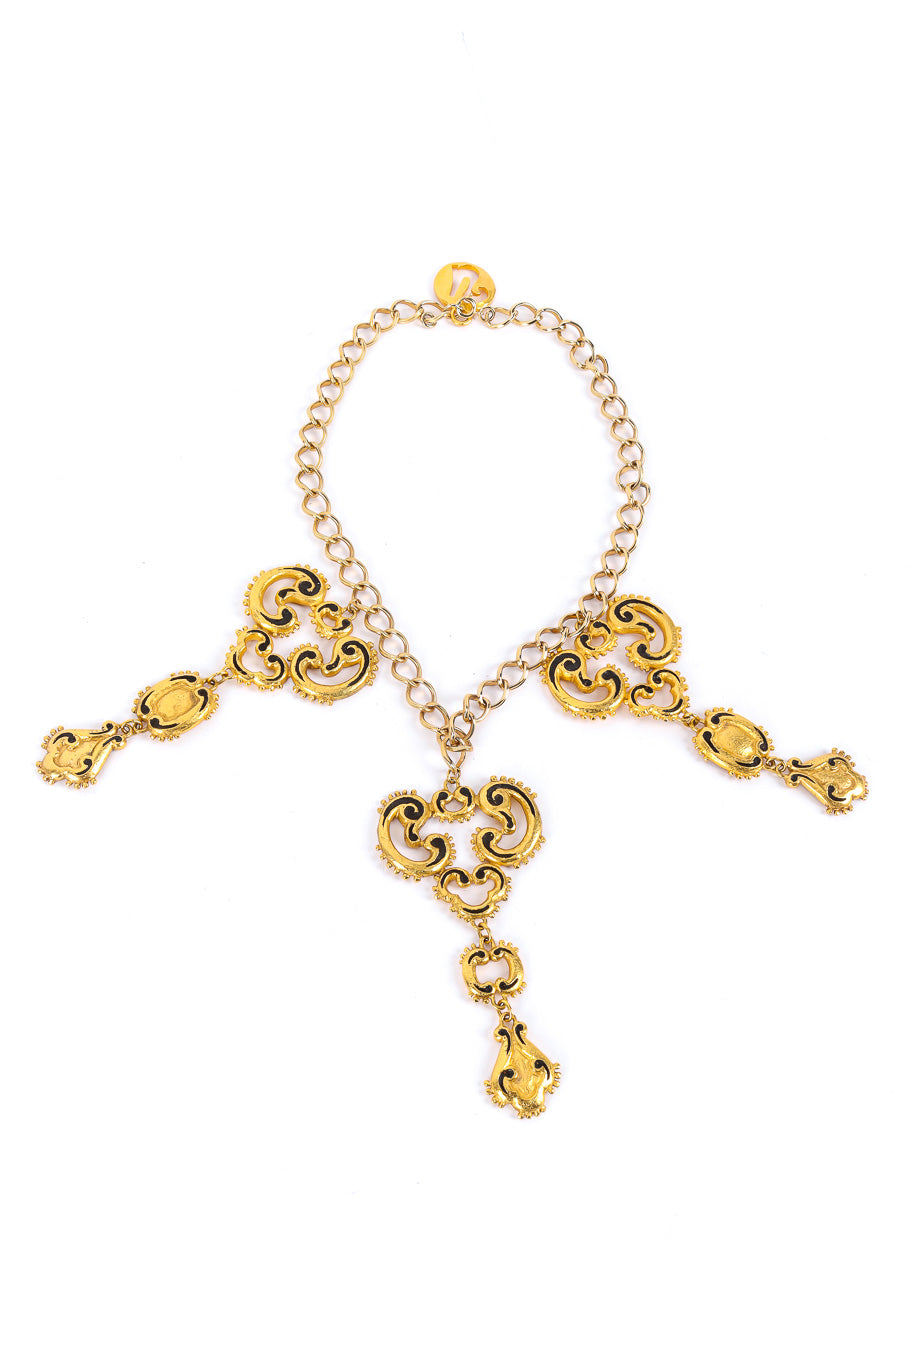 Vintage Emanuel Ungaro 3-strand Garland Necklace laid flat @Recessla